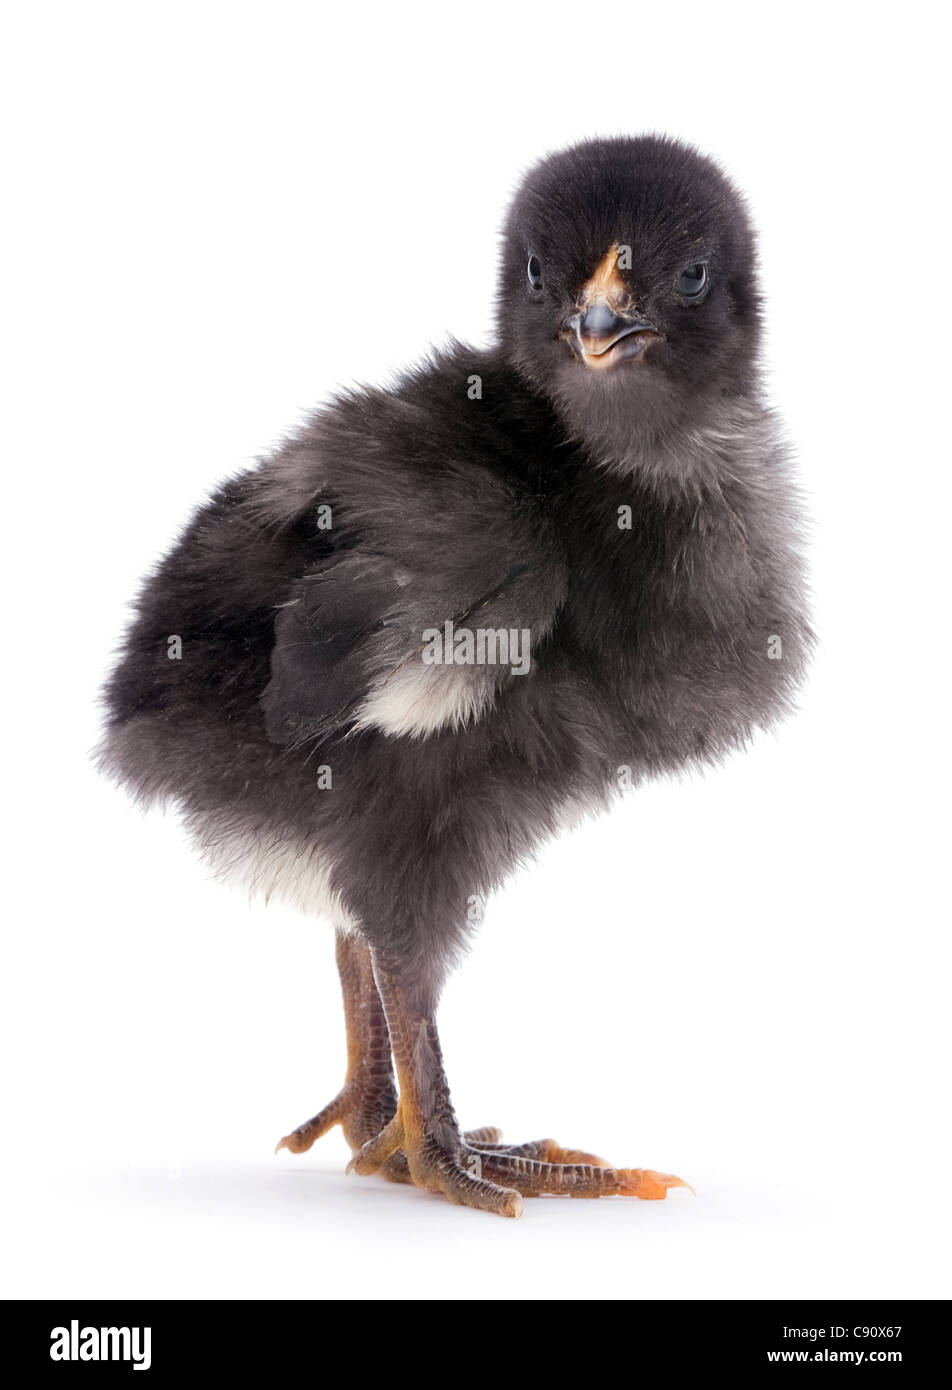 Baby Chicken libre isolé sur fond blanc Banque D'Images